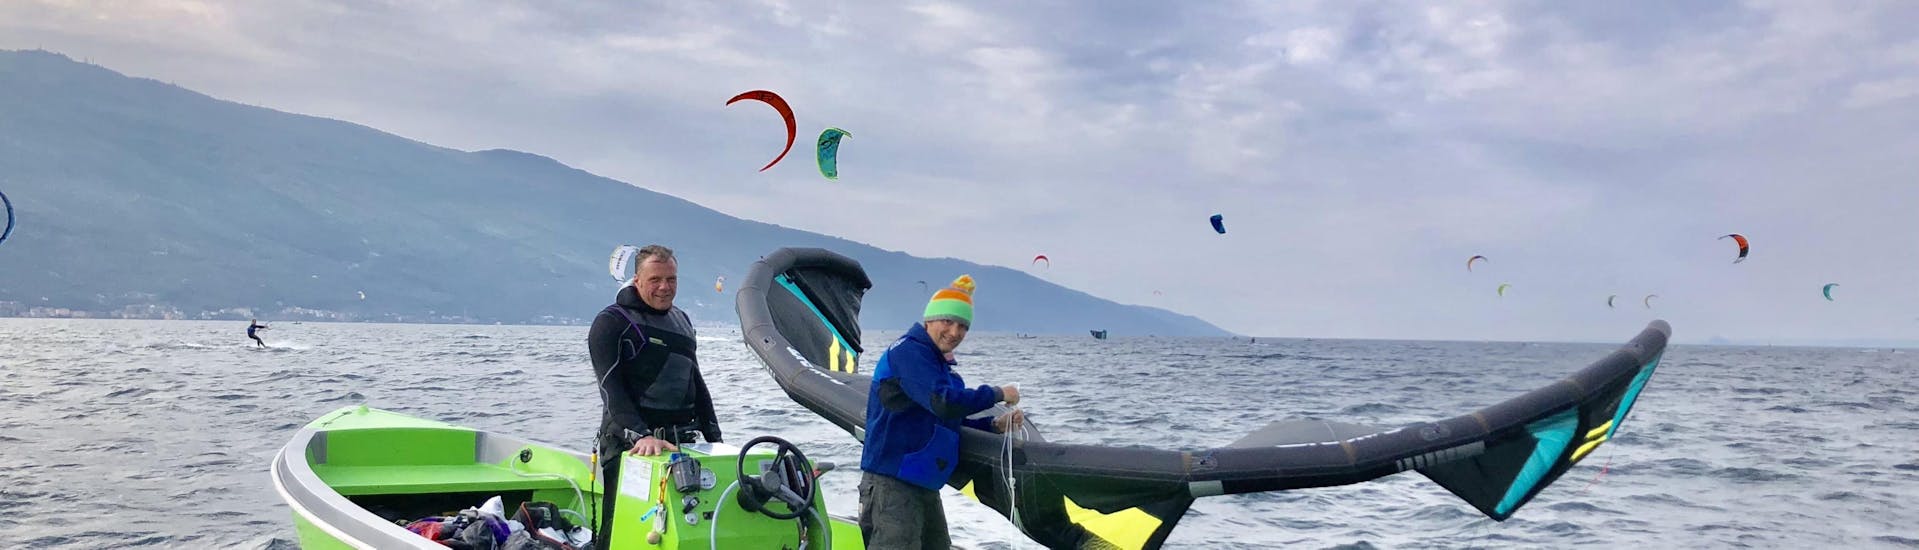 Cours privé de kitesurf (dès 12 ans) avec Gardakitesurf - Hero image